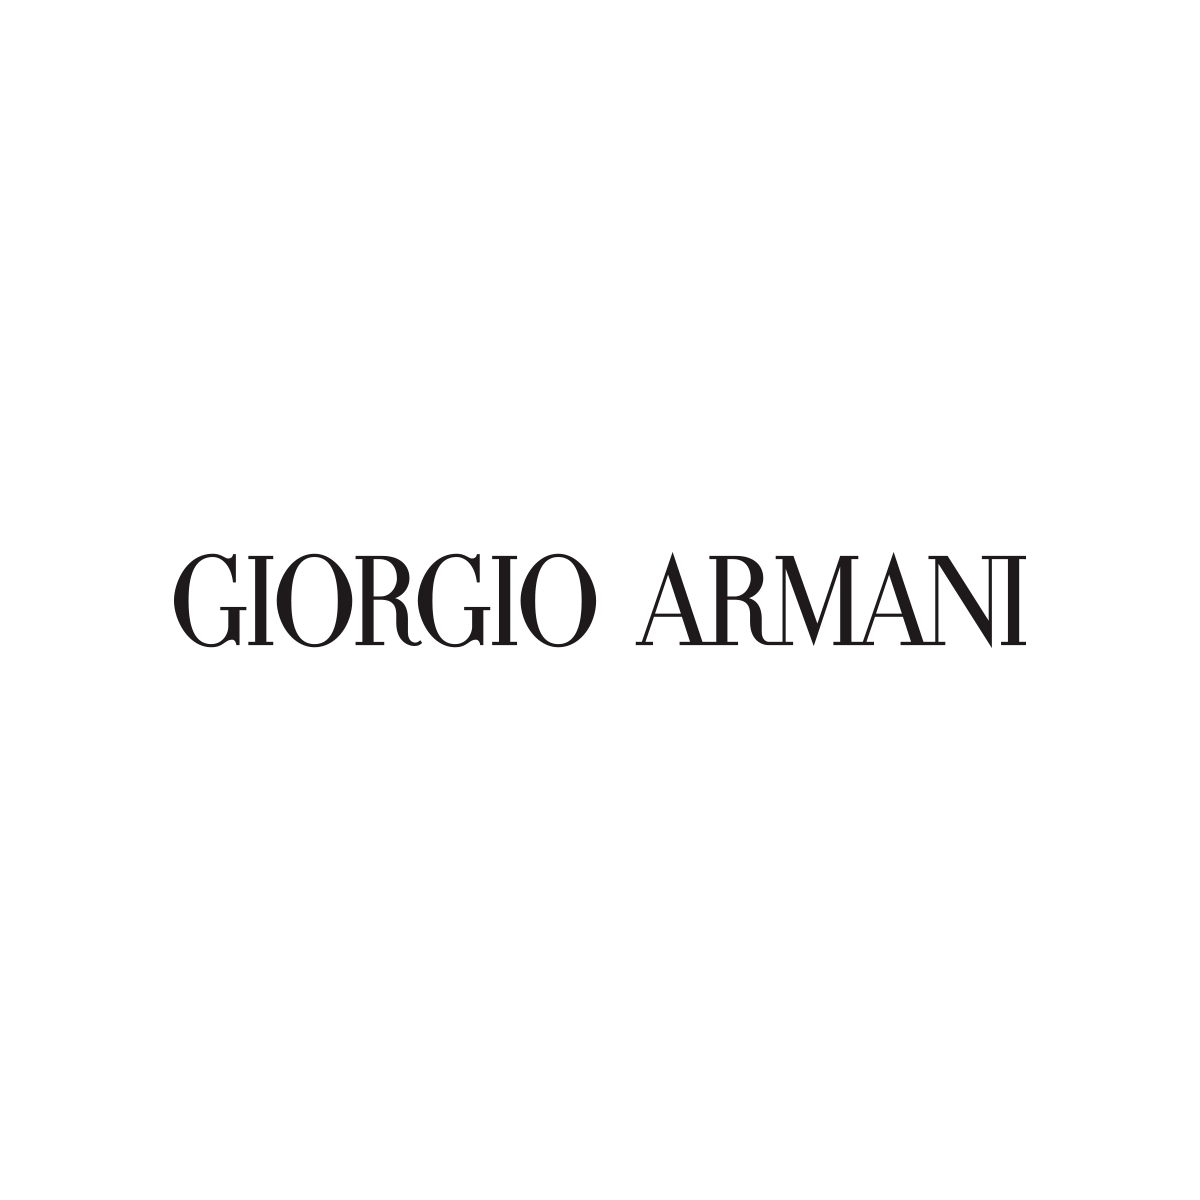 Giorgio Armani - Clothing Manufacturers & Wholesalers